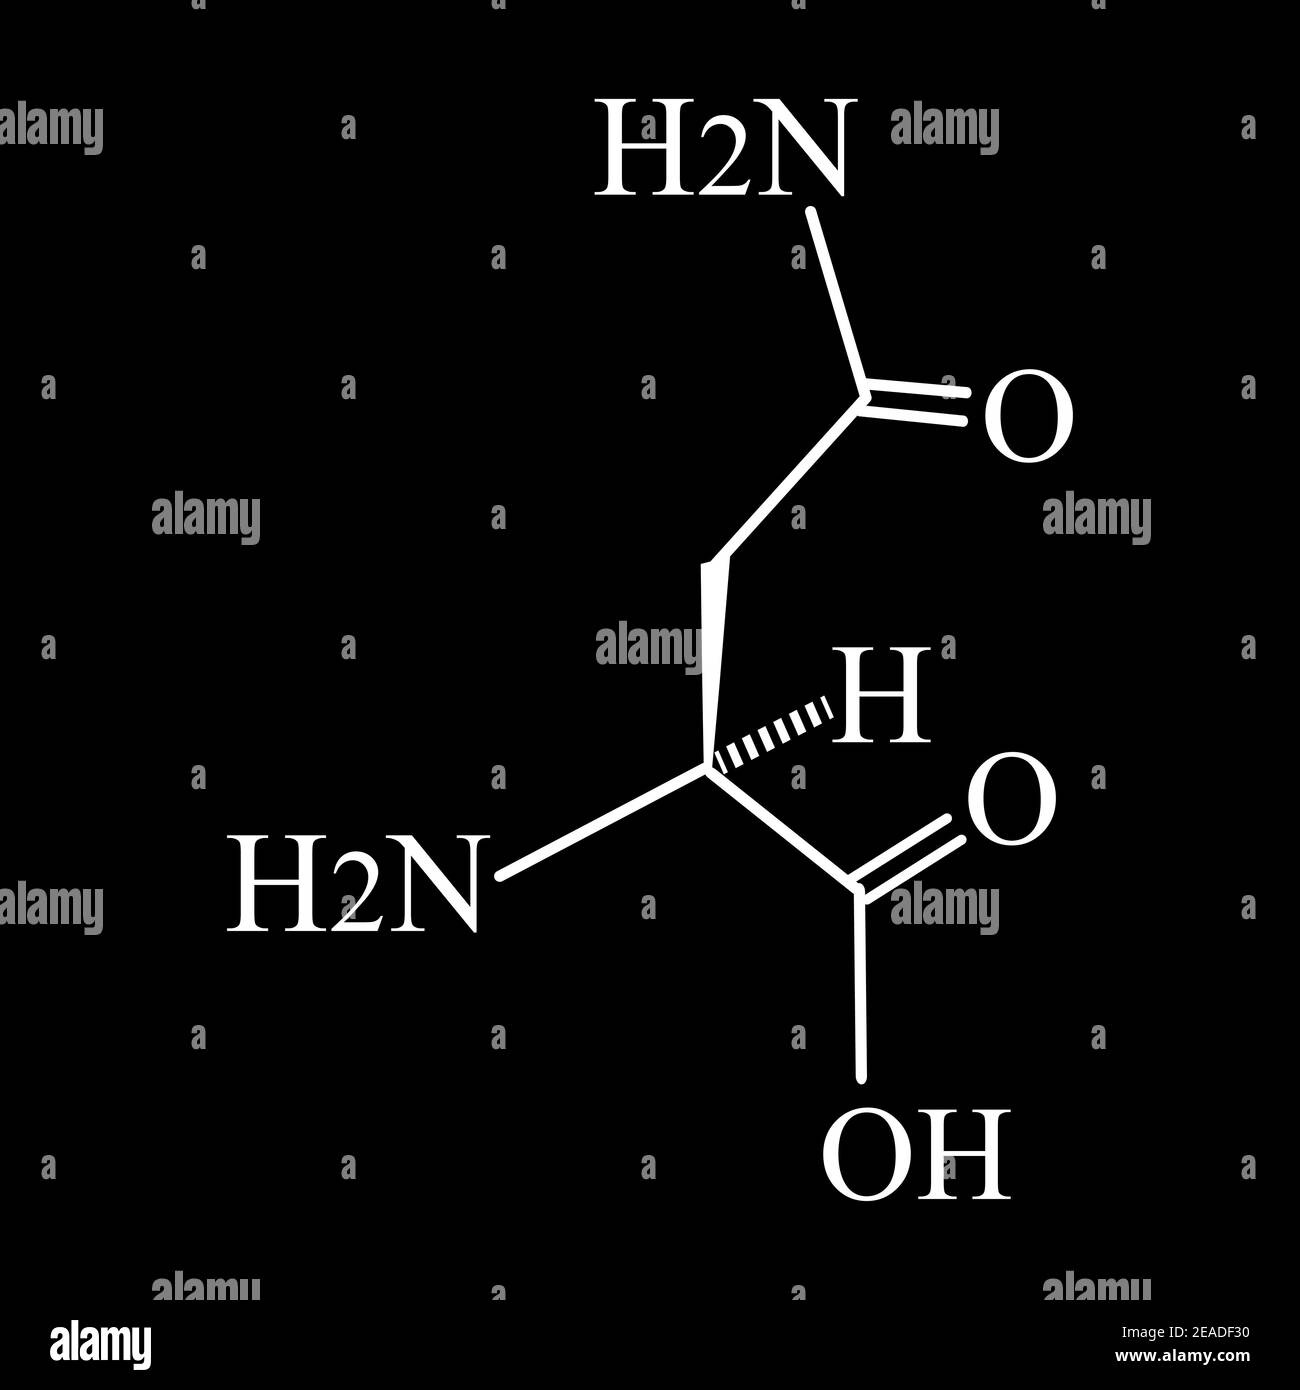 Asparagine is an amino acid. Chemical molecular formula Asparagine is amino acid. Vector illustration on isolated background Stock Vector